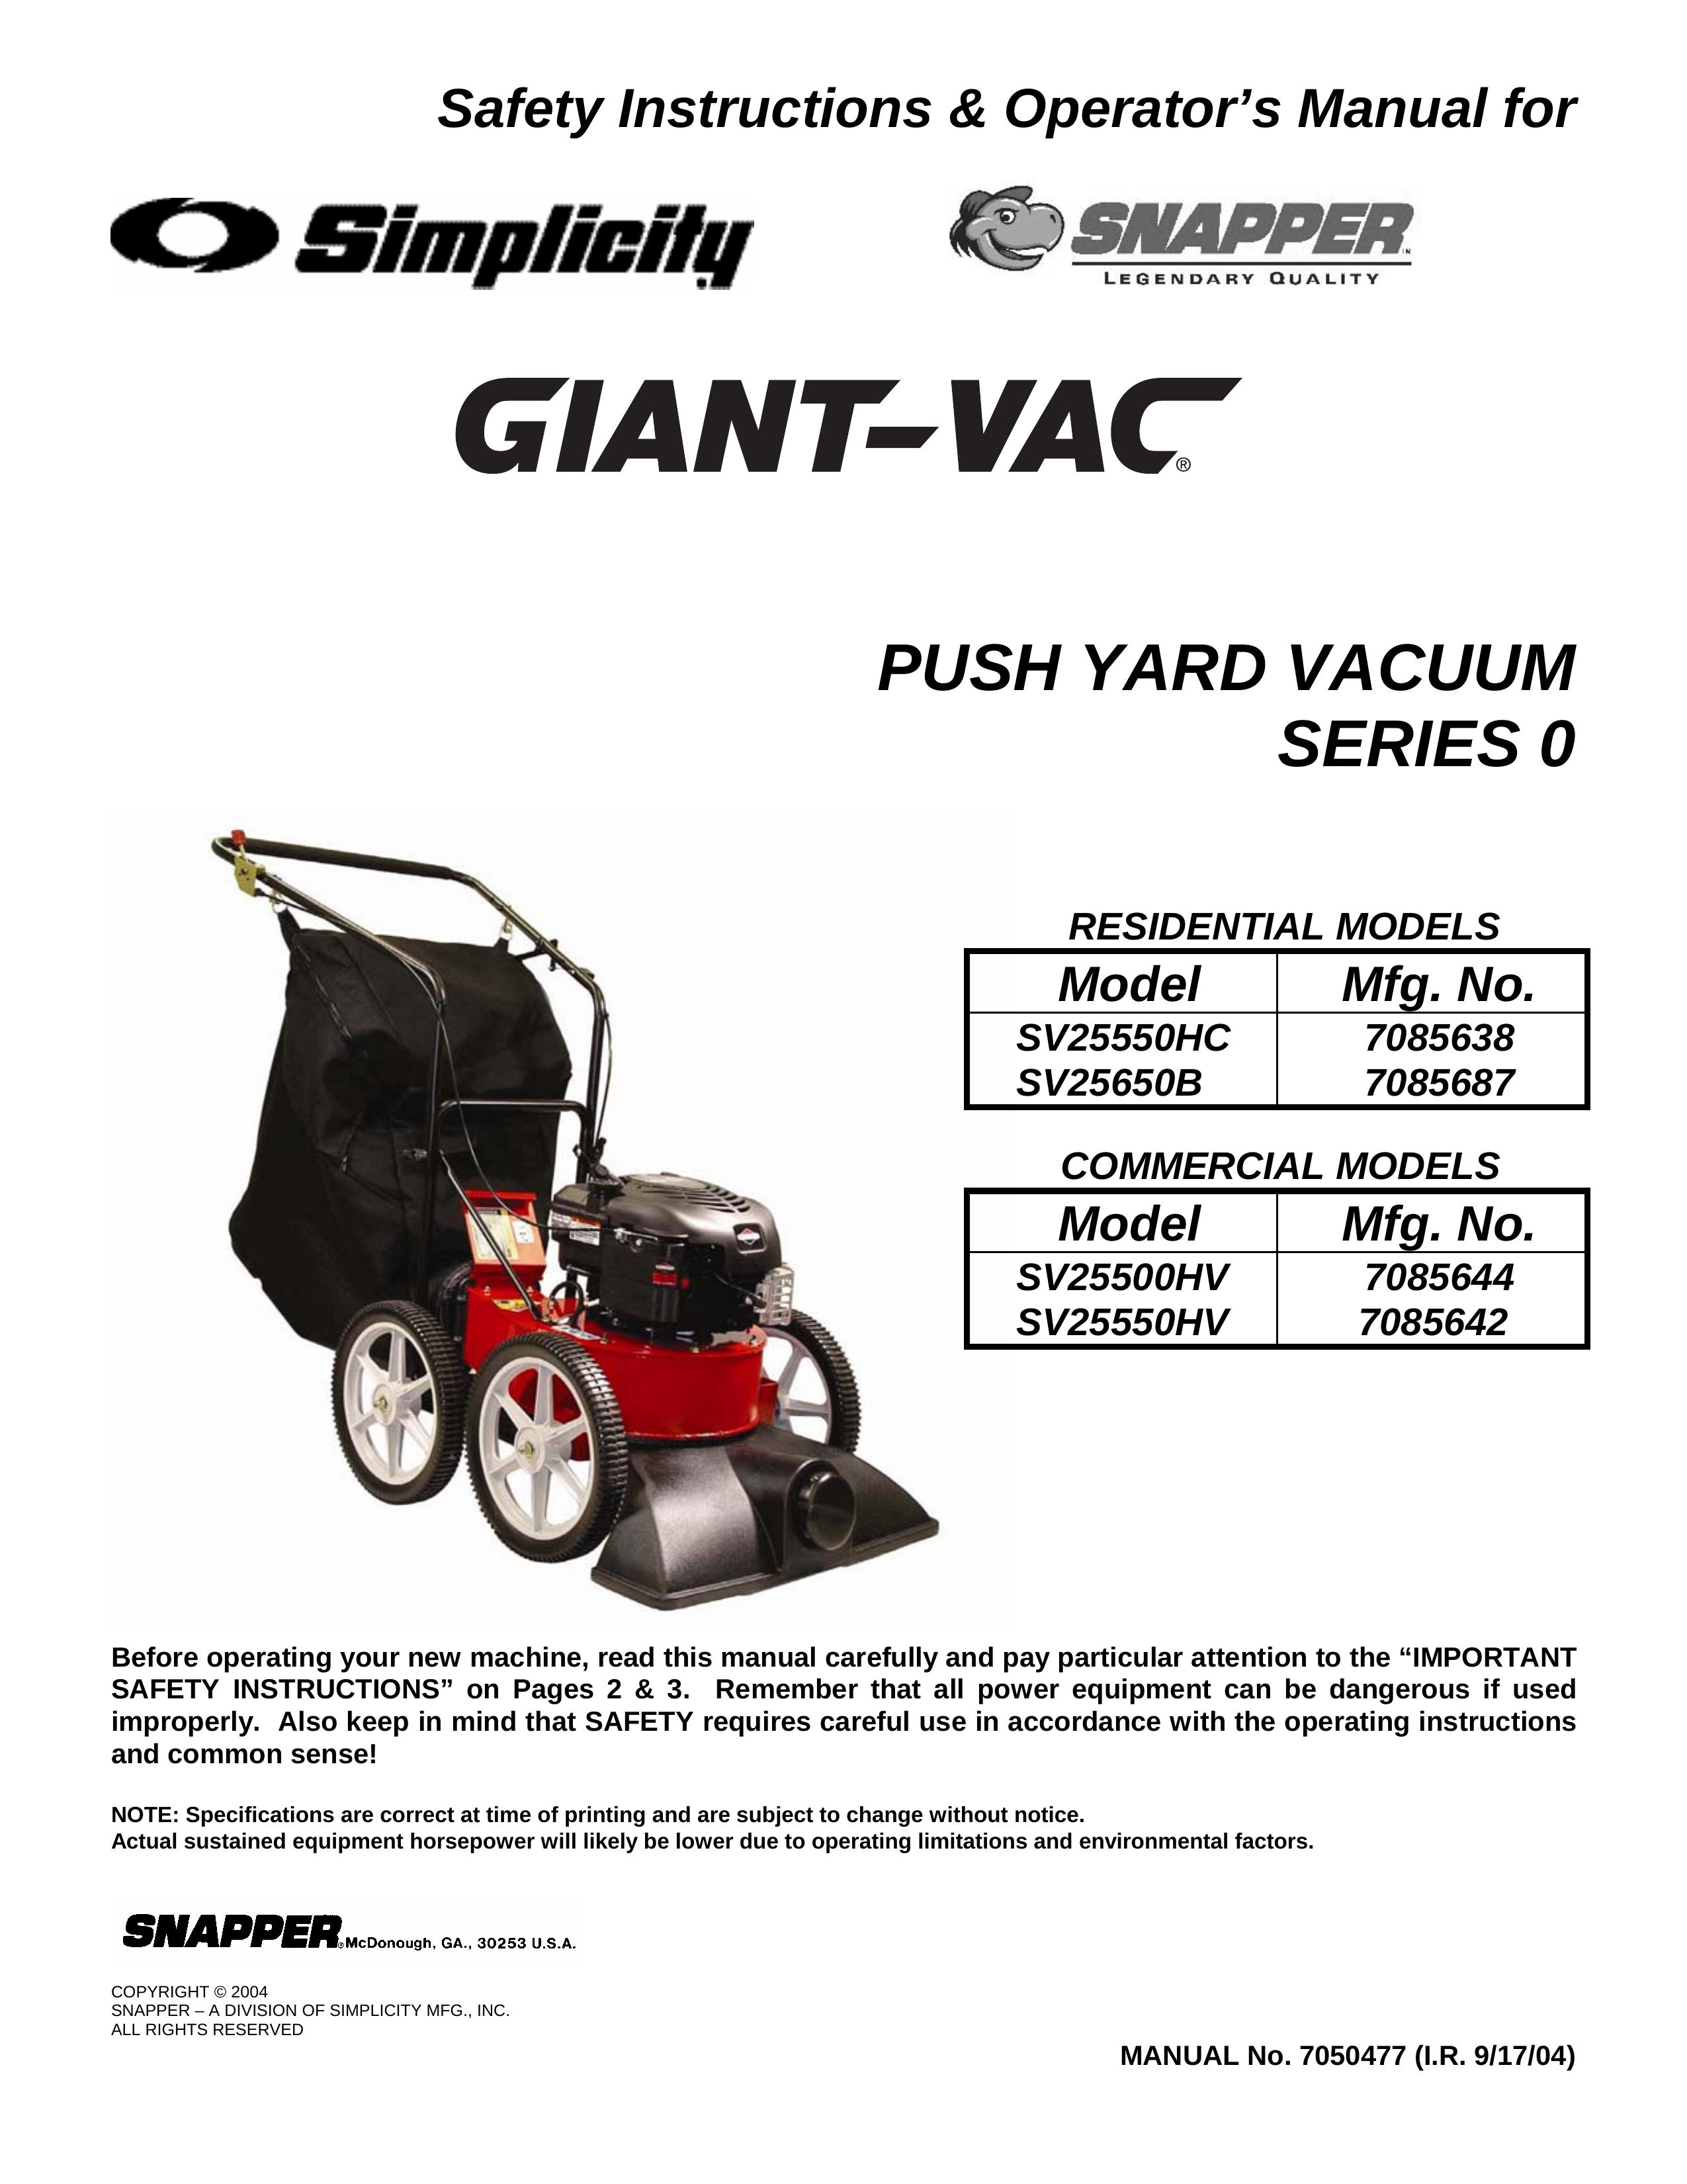 Snapper SV25500HV, ESV25550HV, SV25550HC, SV25650B Yard Vacuum User Manual